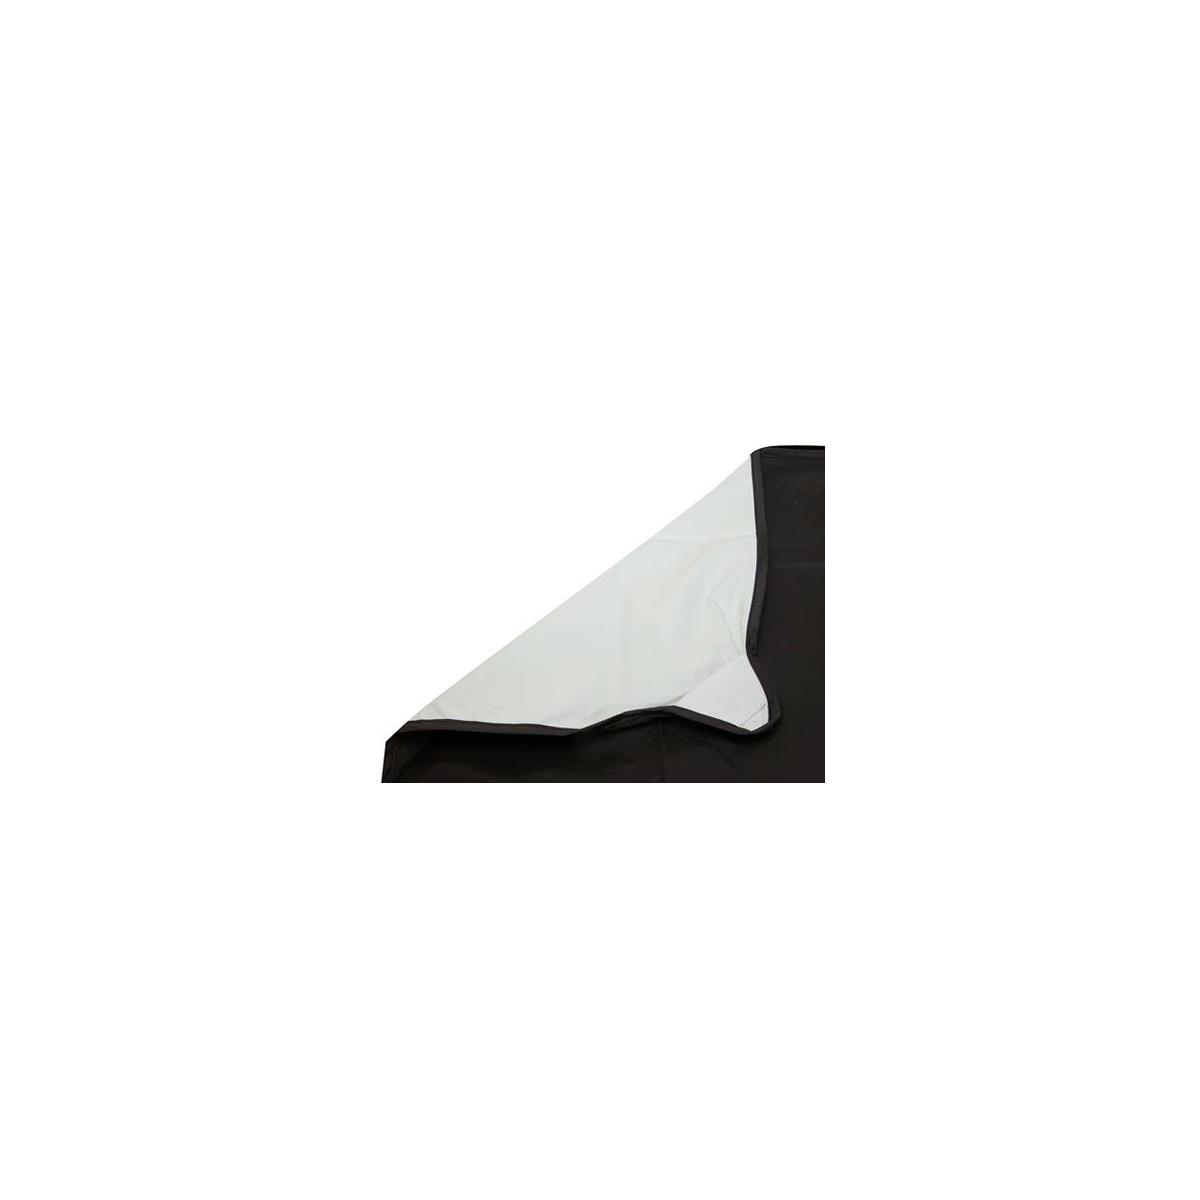 Image of Photoflex Litepanel 39in x 39in White / Black Fabric